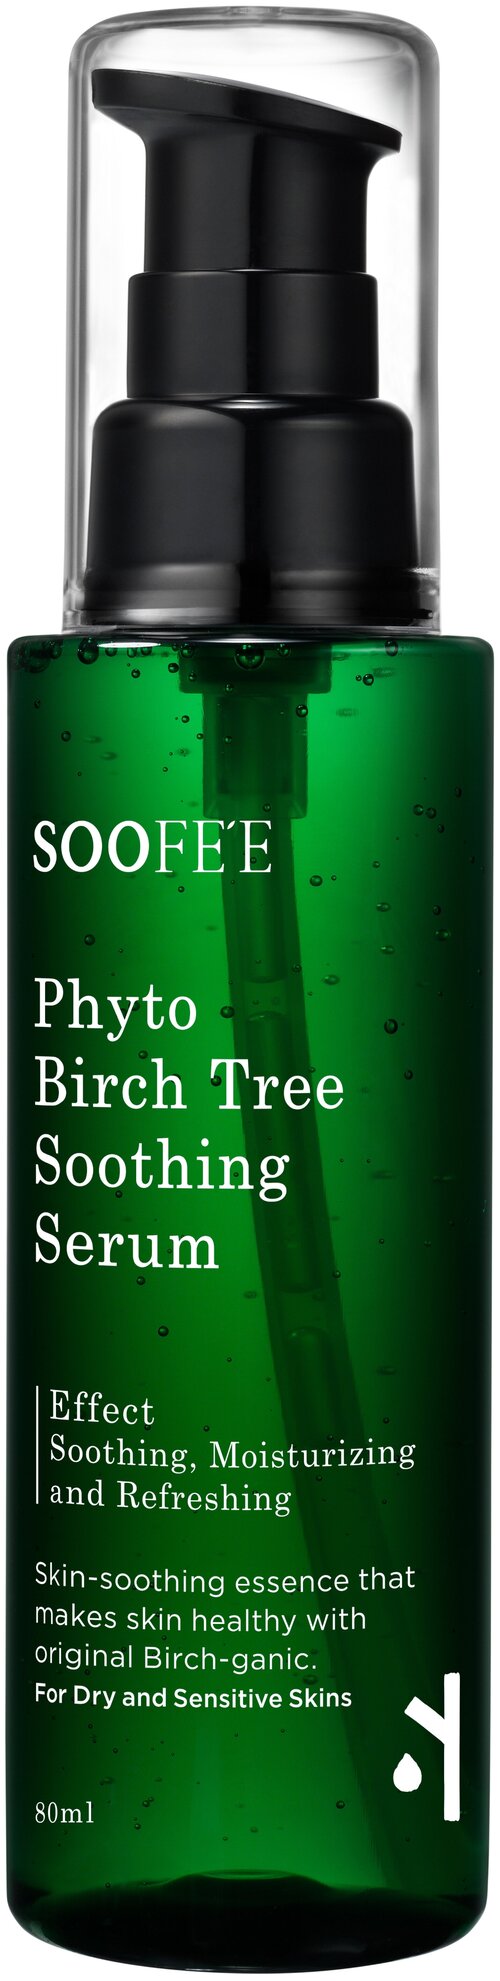 Фито Сыворотка на основе берёзового сока SOOFEE Phyto Birch Tree Soothing Serum, 80 мл